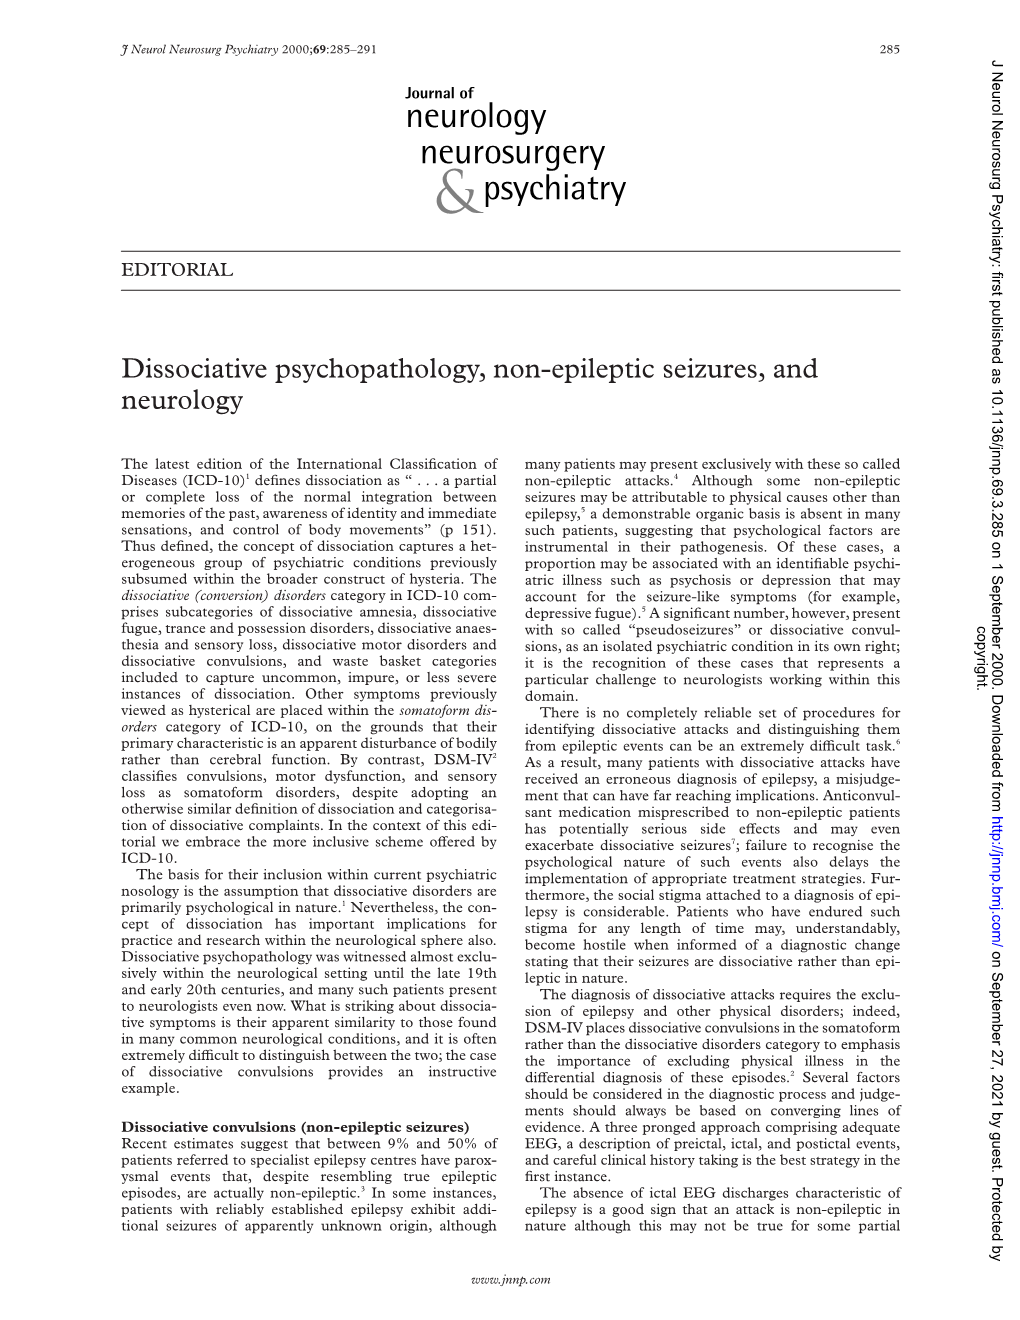 Dissociative Psychopathology, Non-Epileptic Seizures, and Neurology